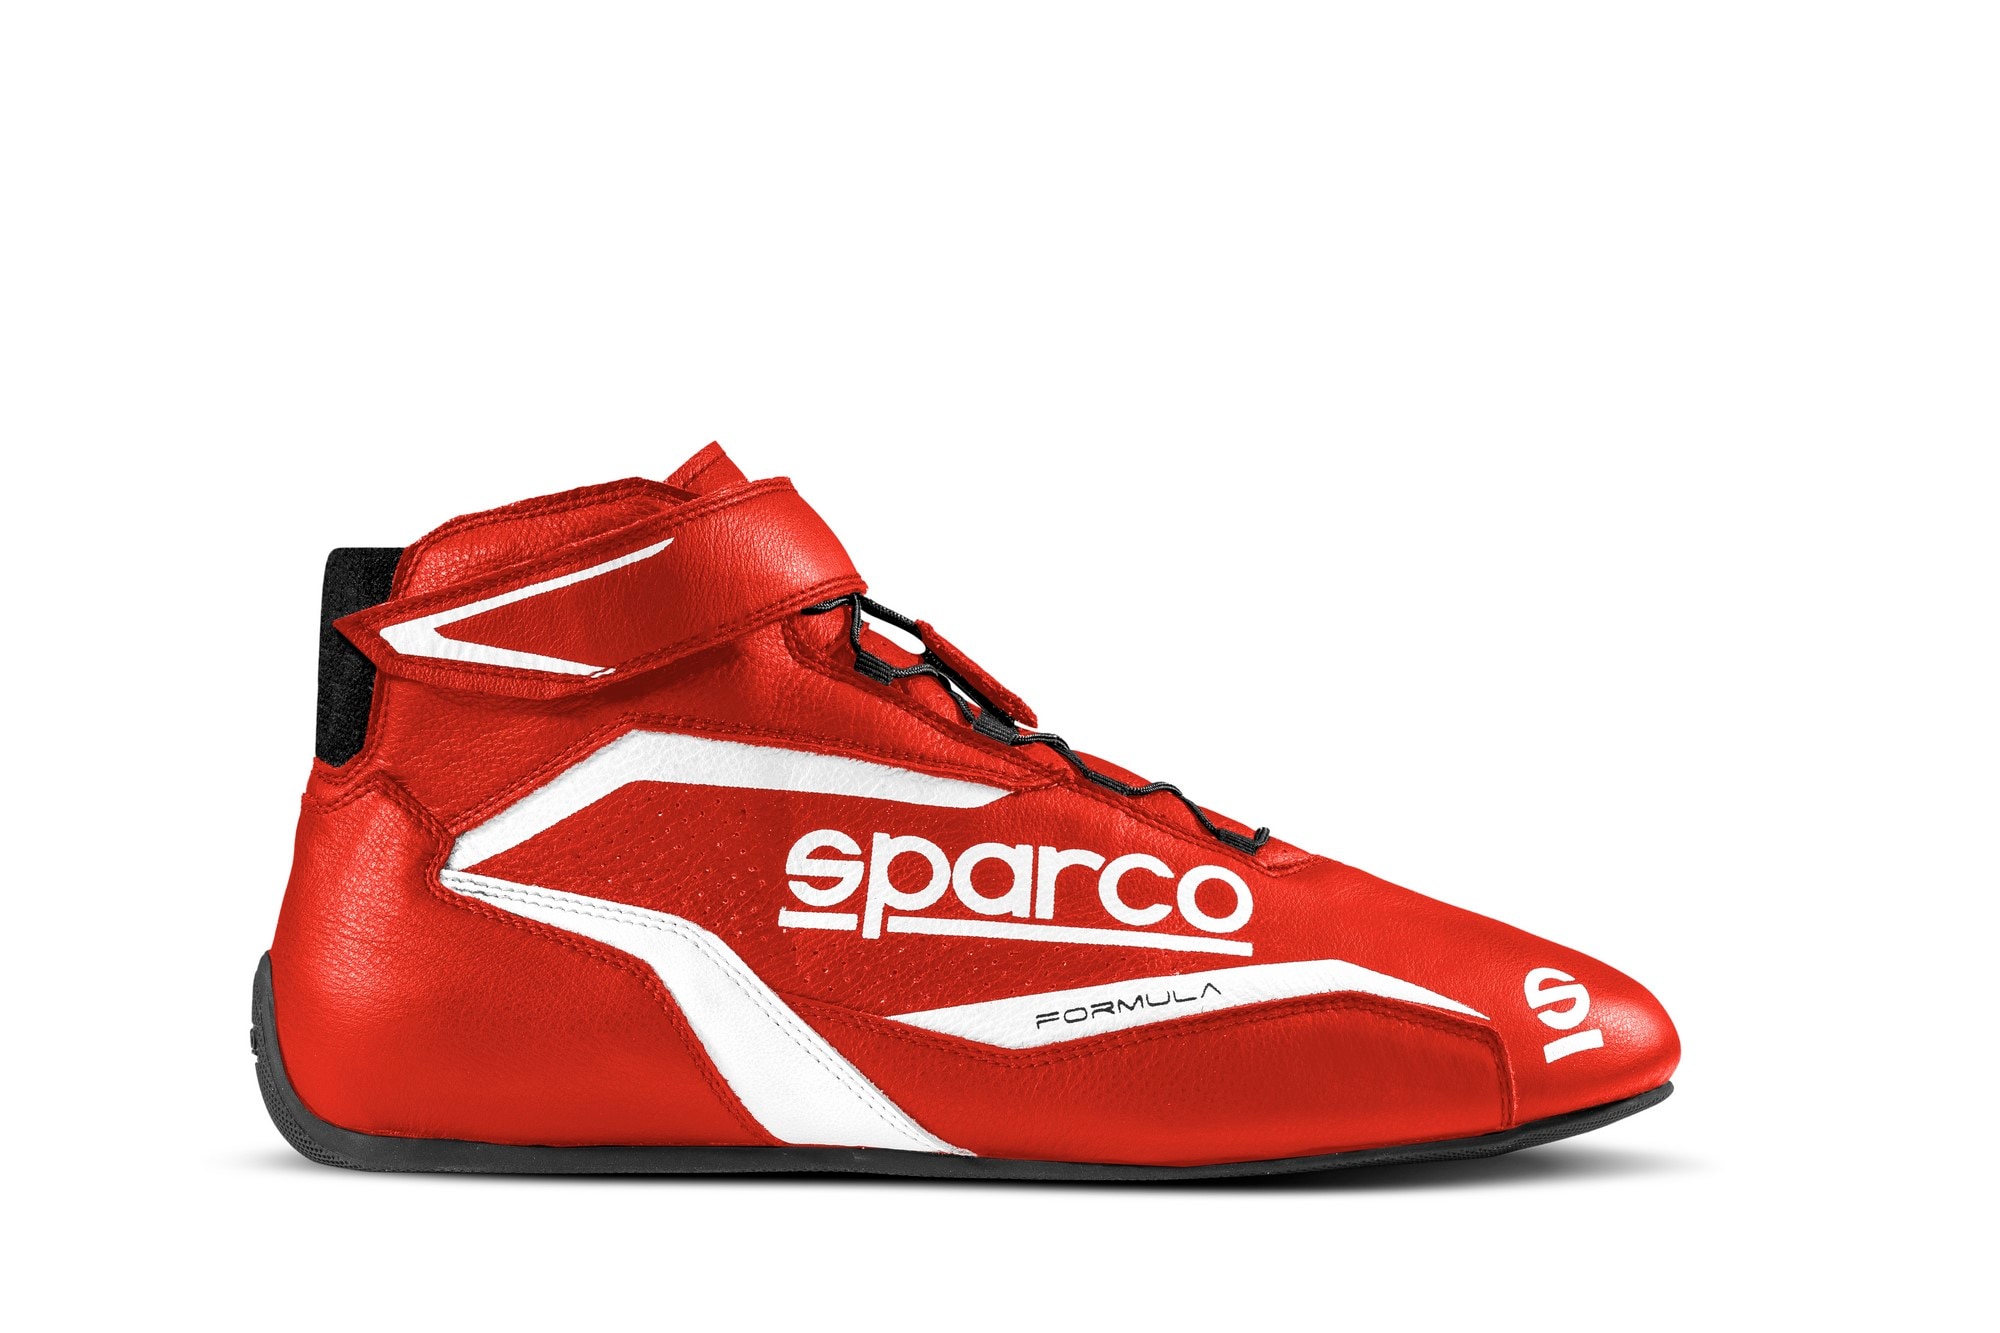 Sko Sparco Formula Rød